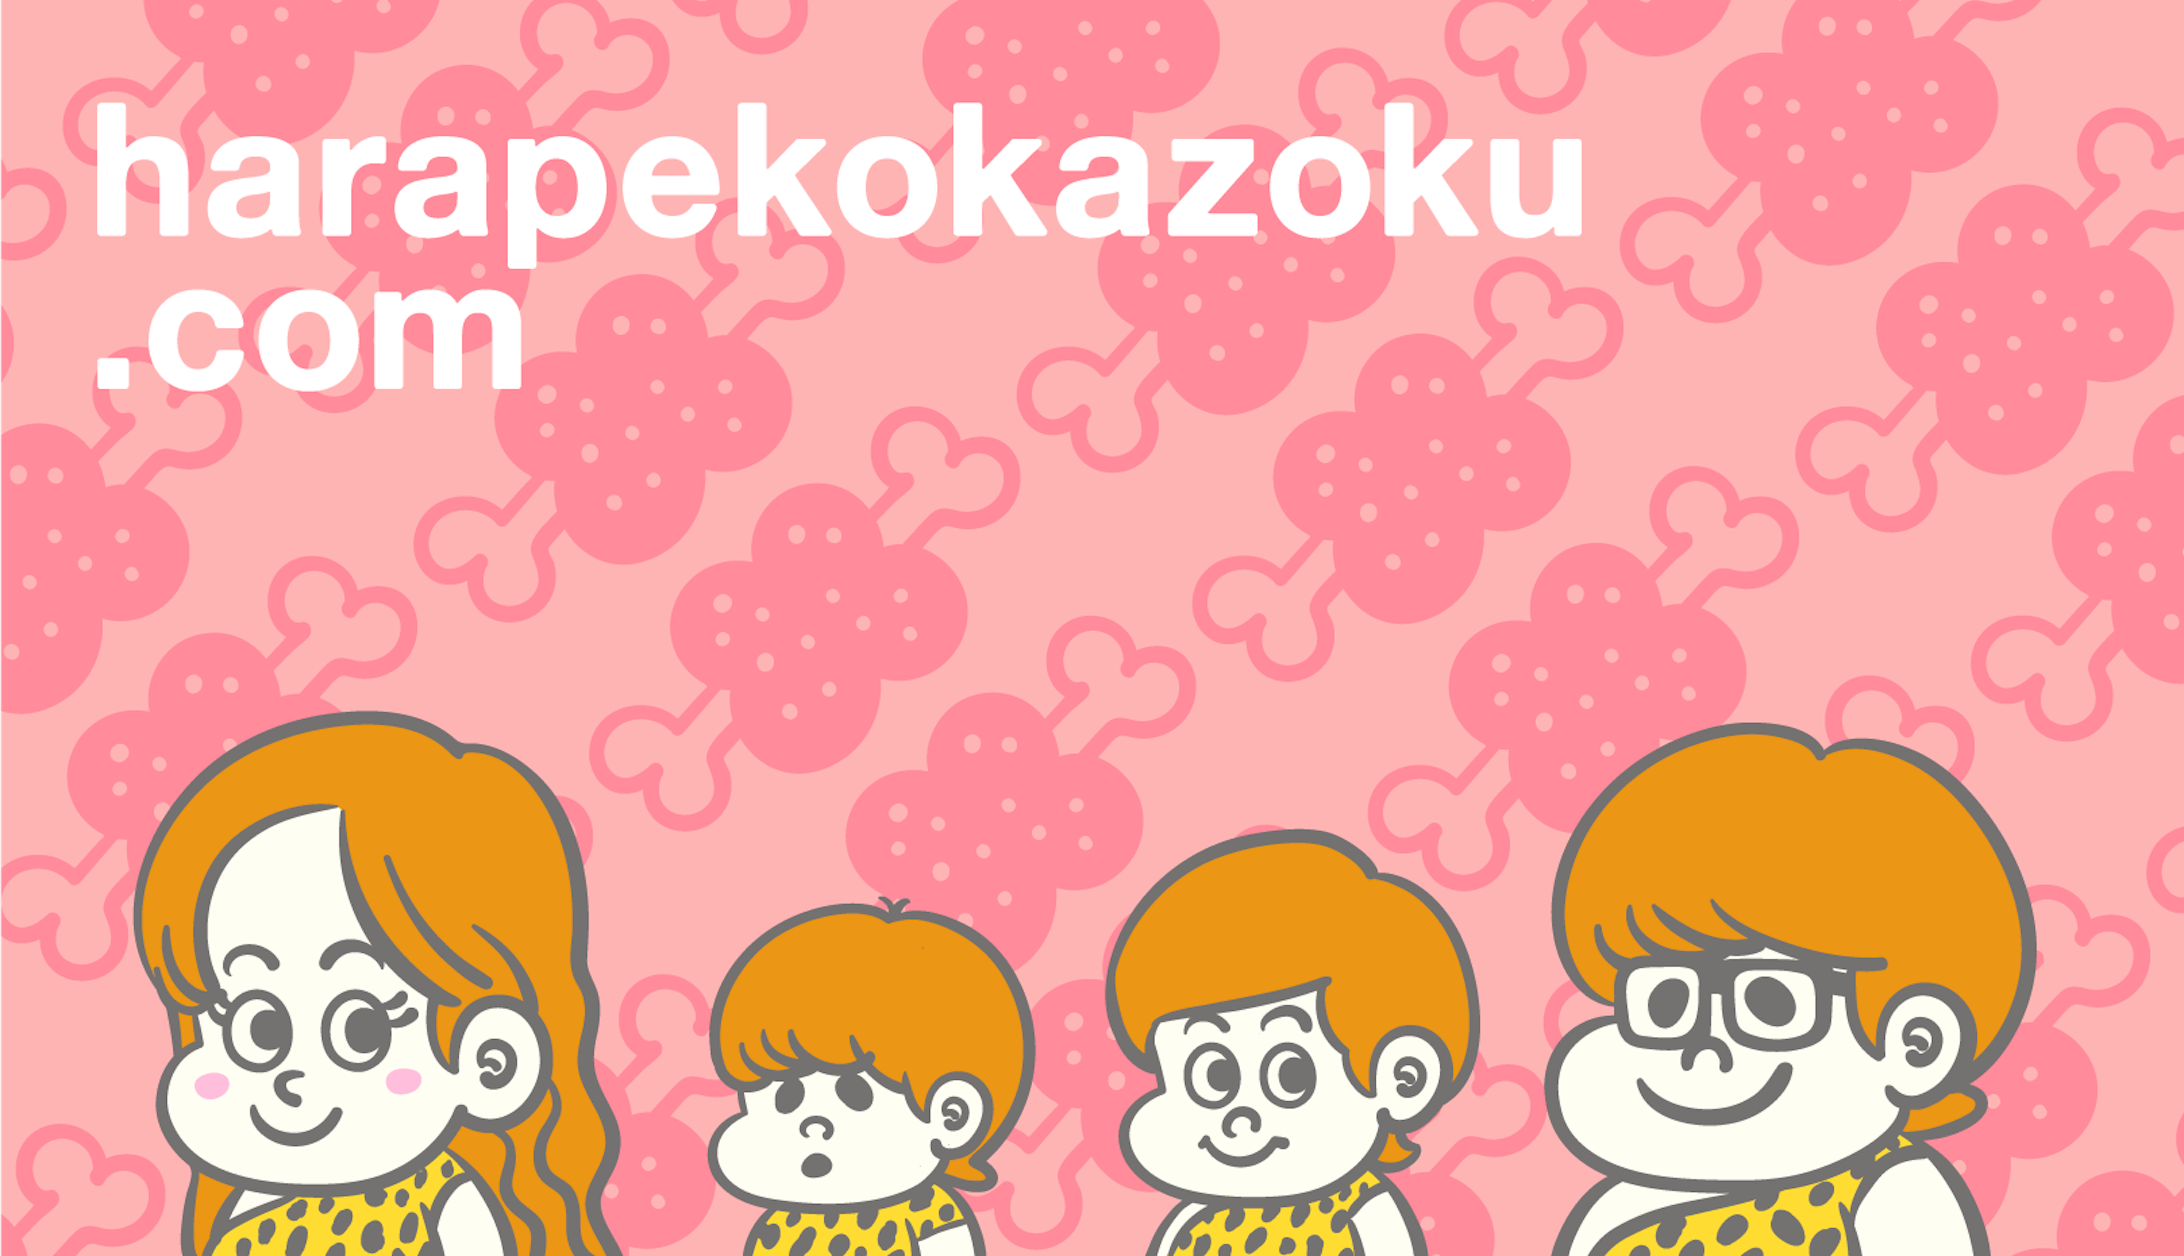 harapekokazoku.com [Branding]-1